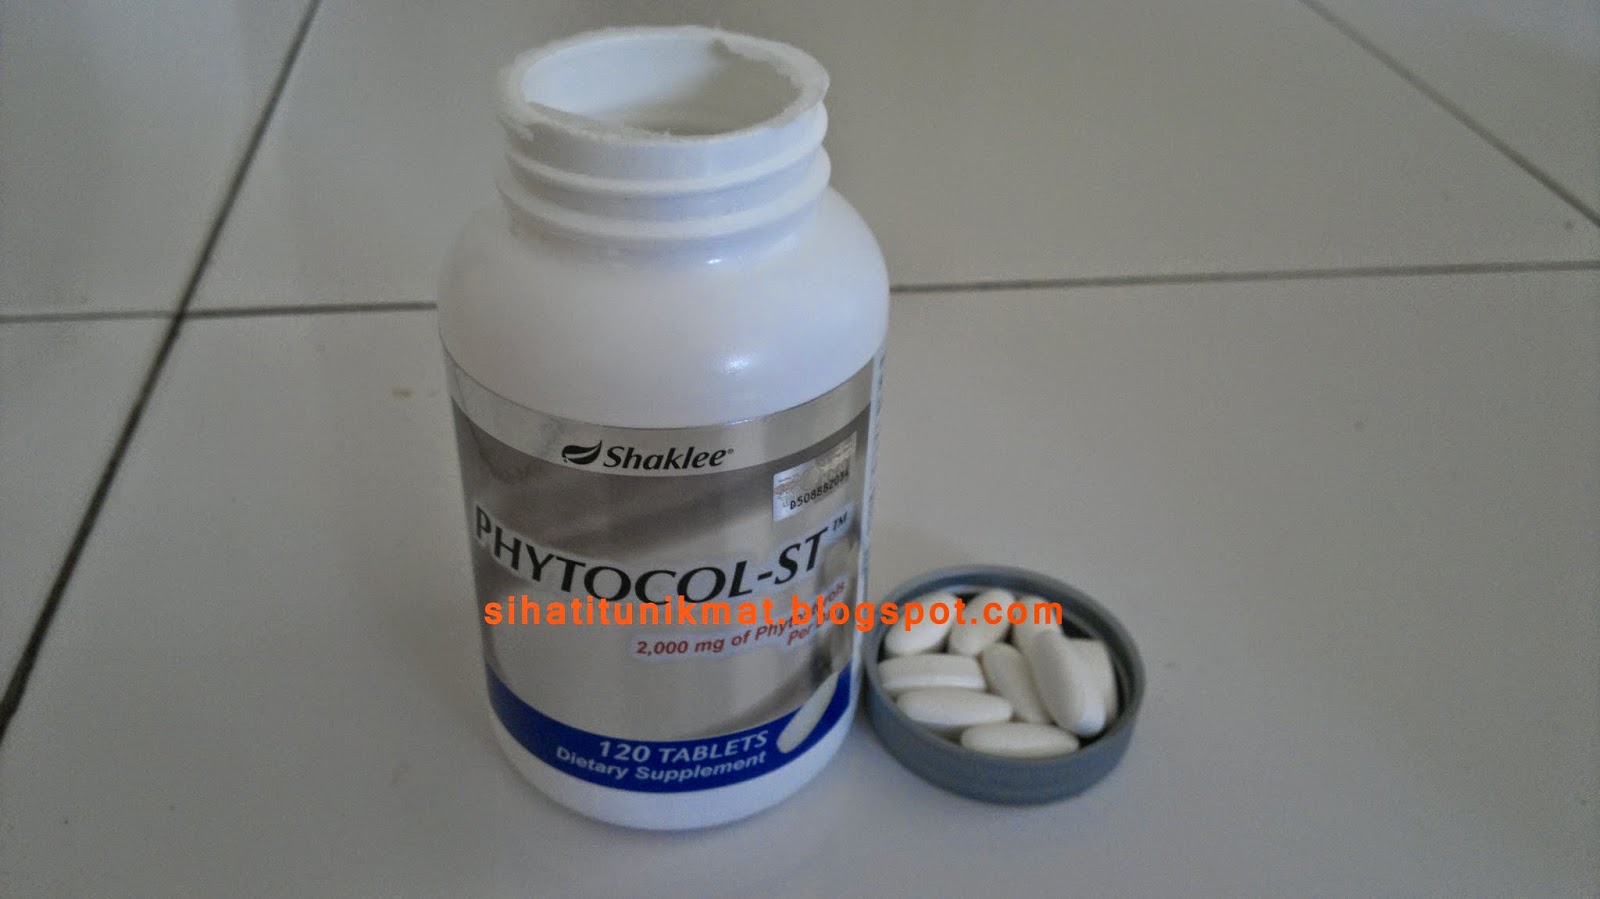 phytocol-st